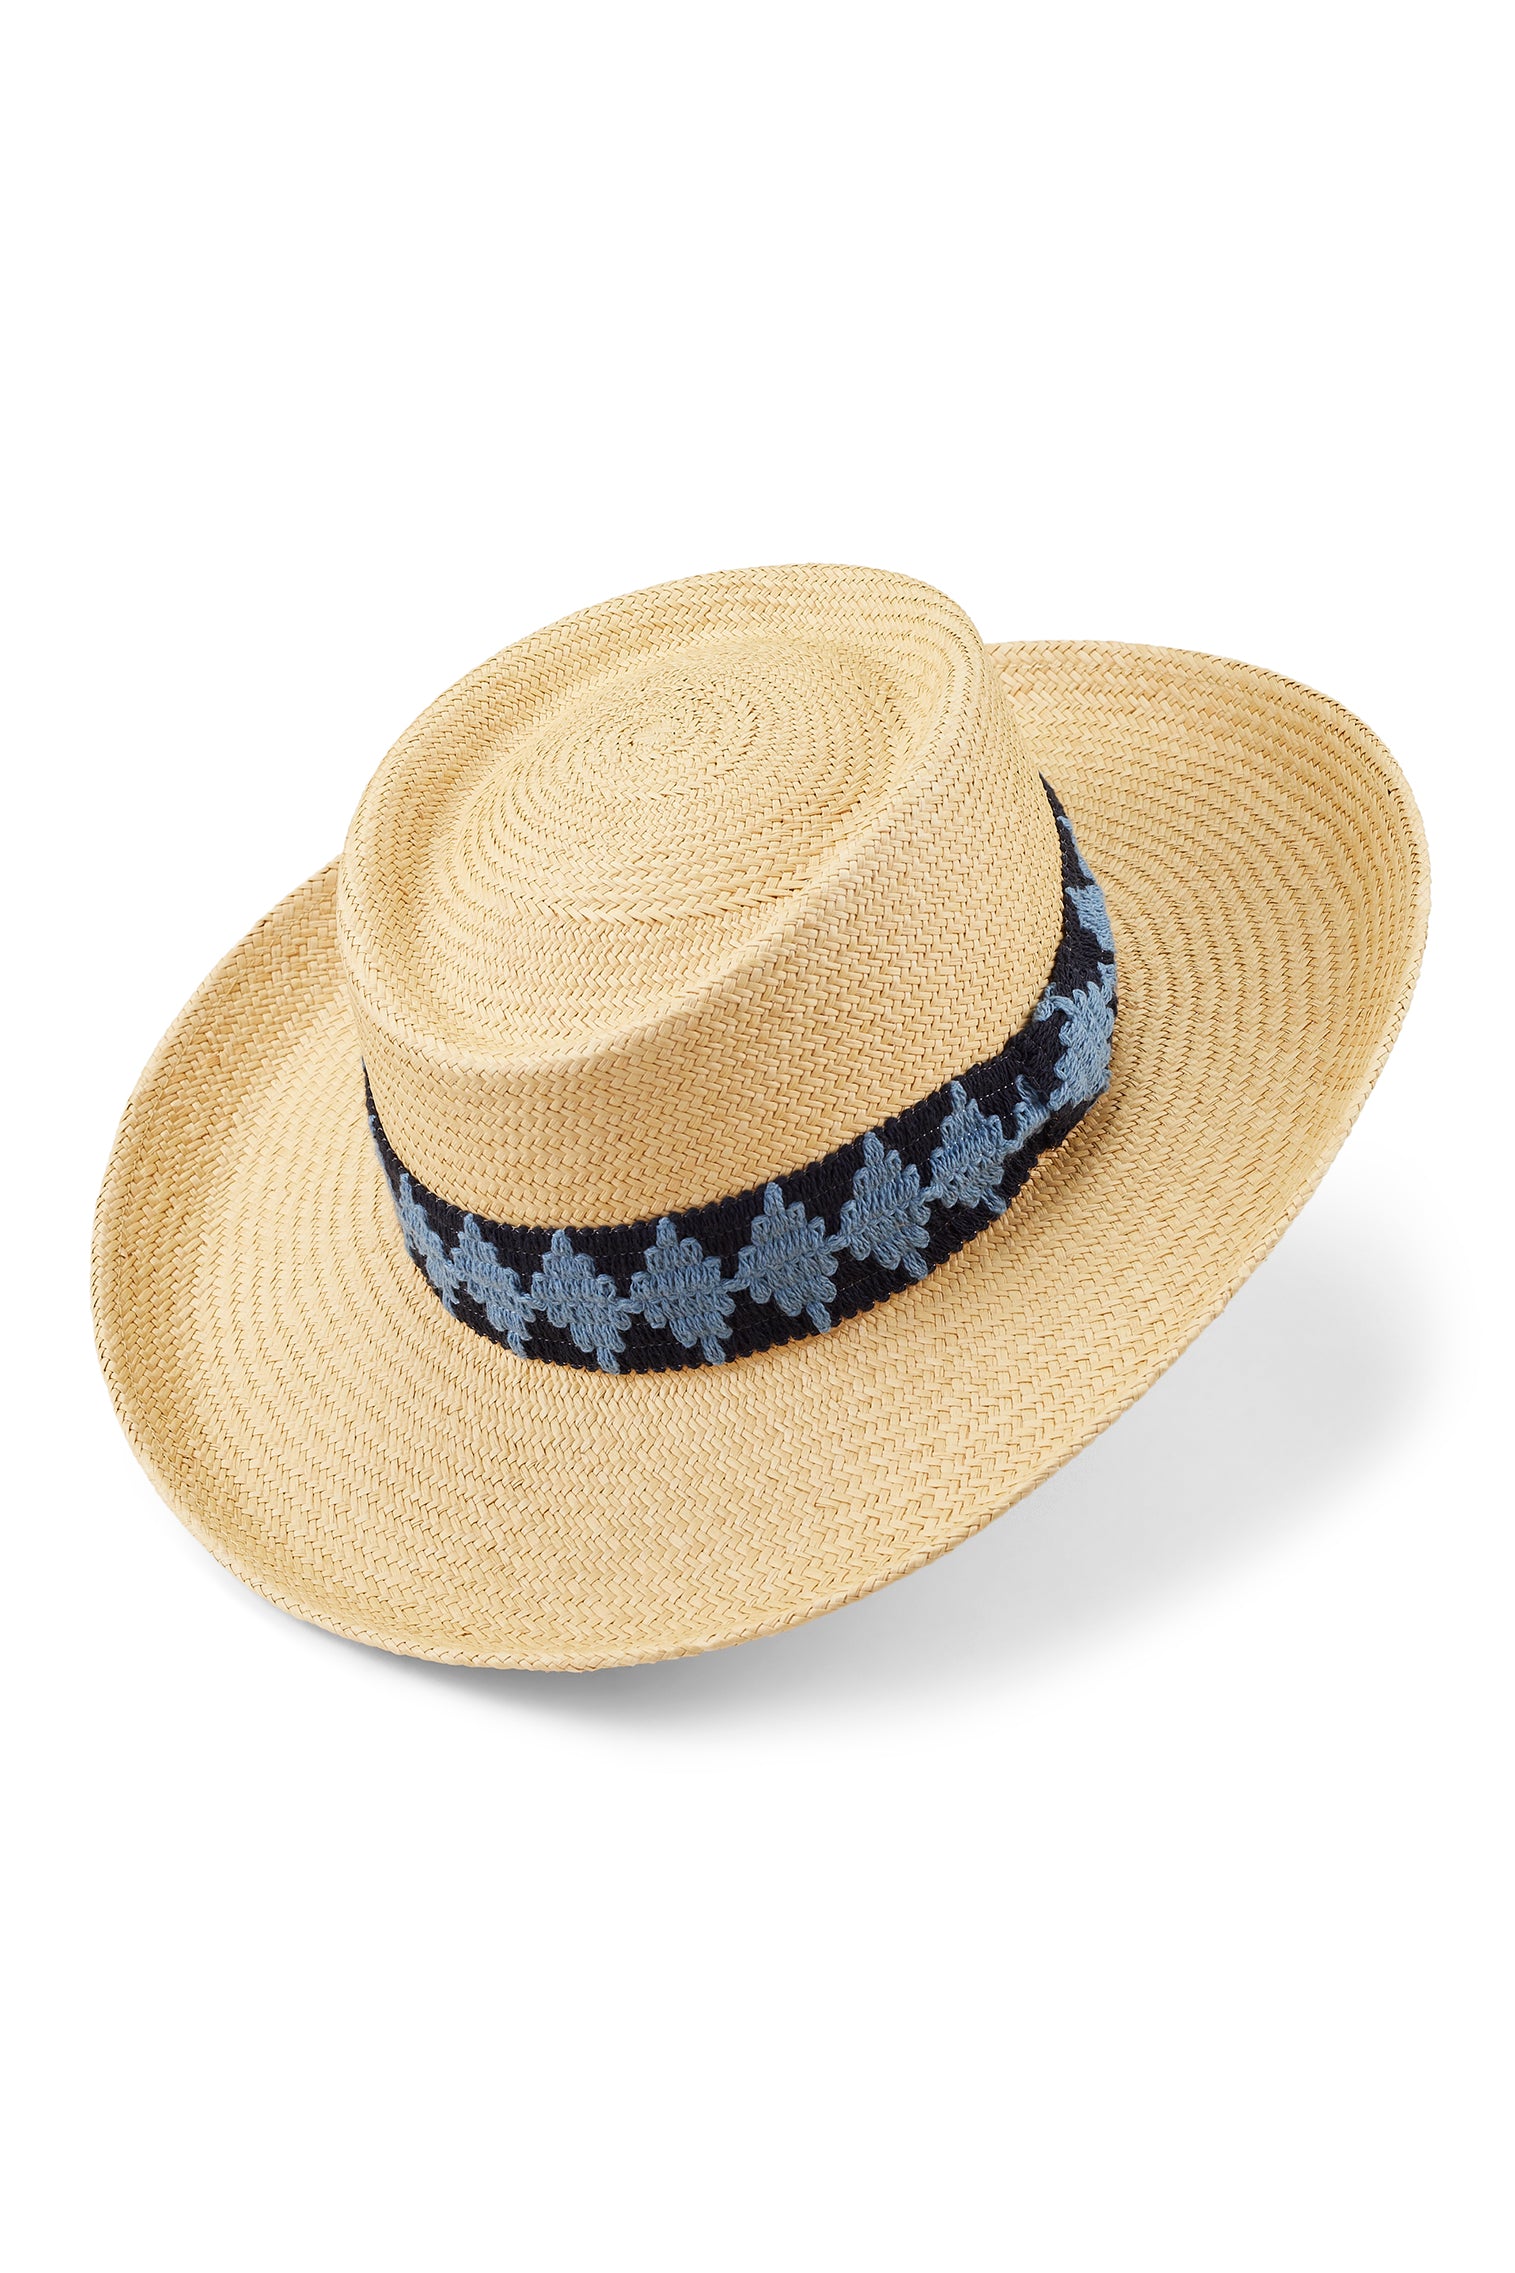 Heath Panama - Panama Hats - Lock & Co. Hatters London UK